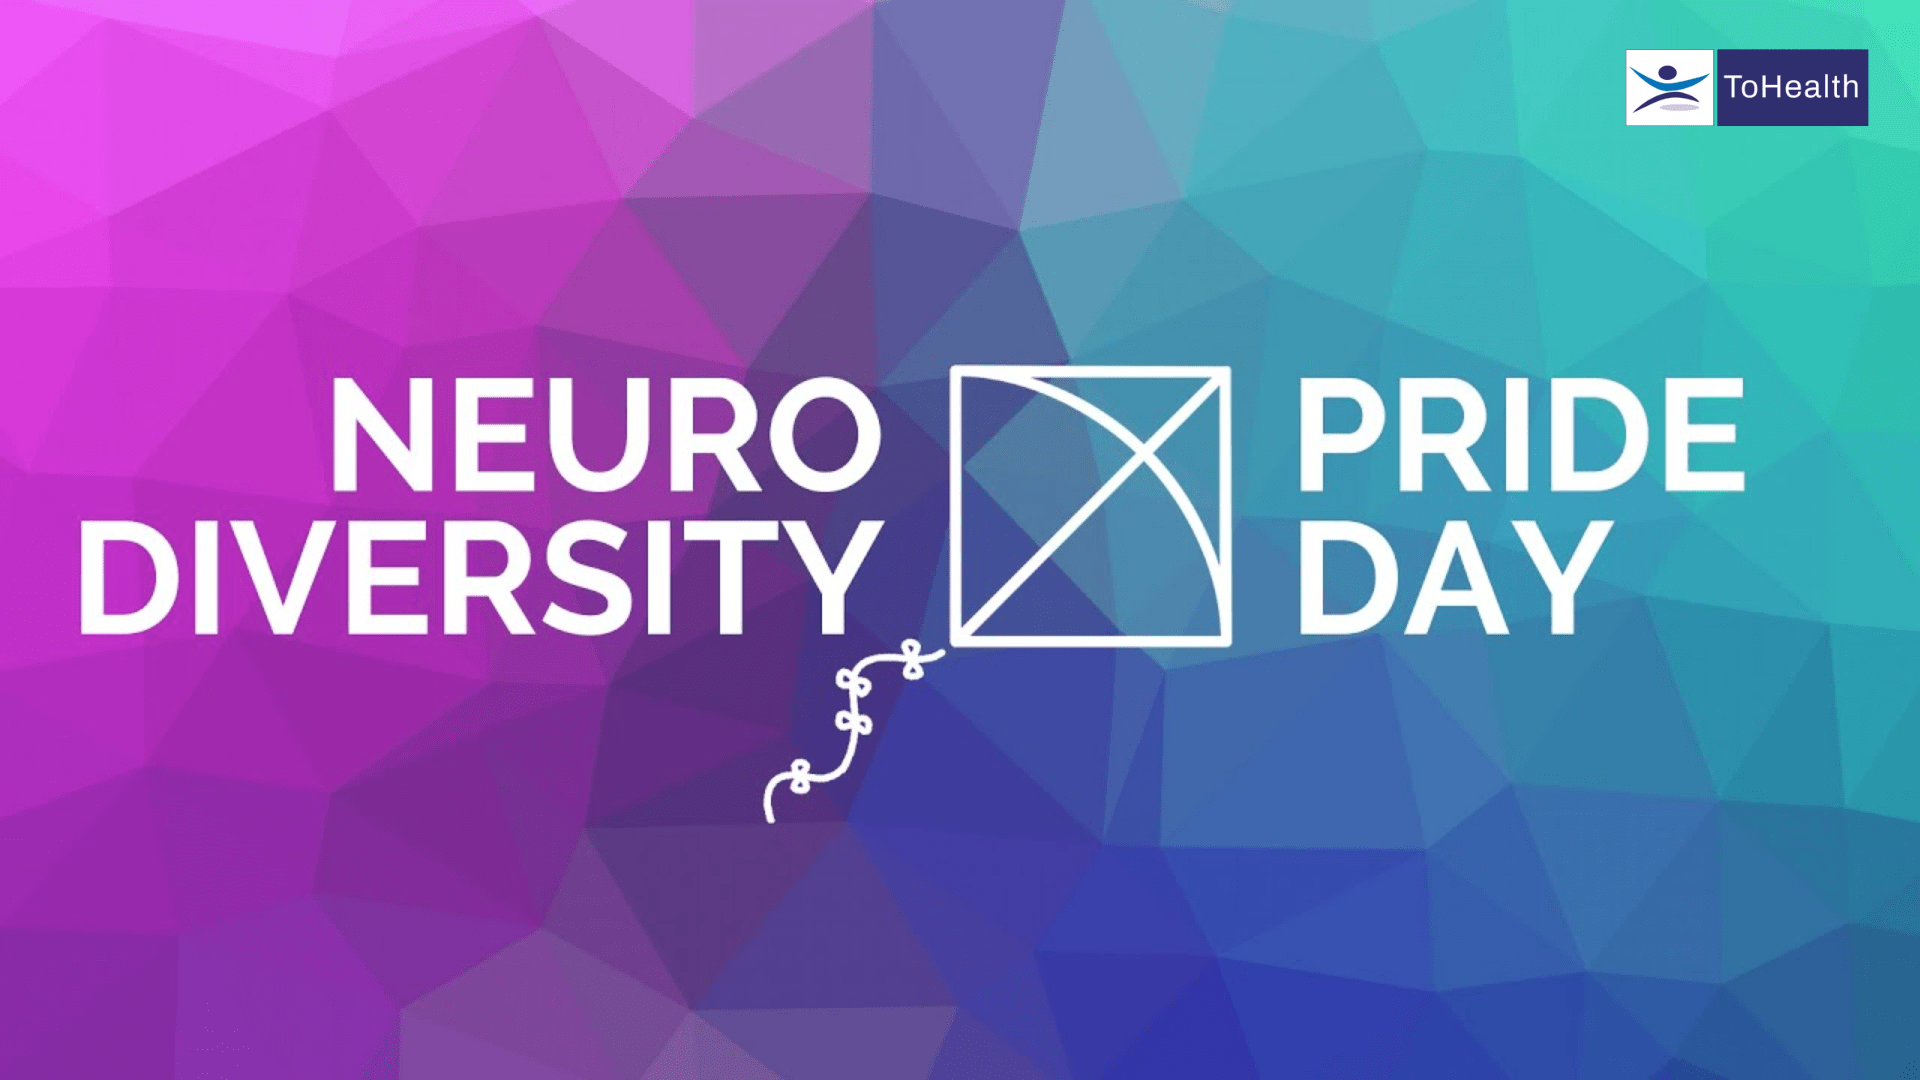 Neurodiversity Pride Day